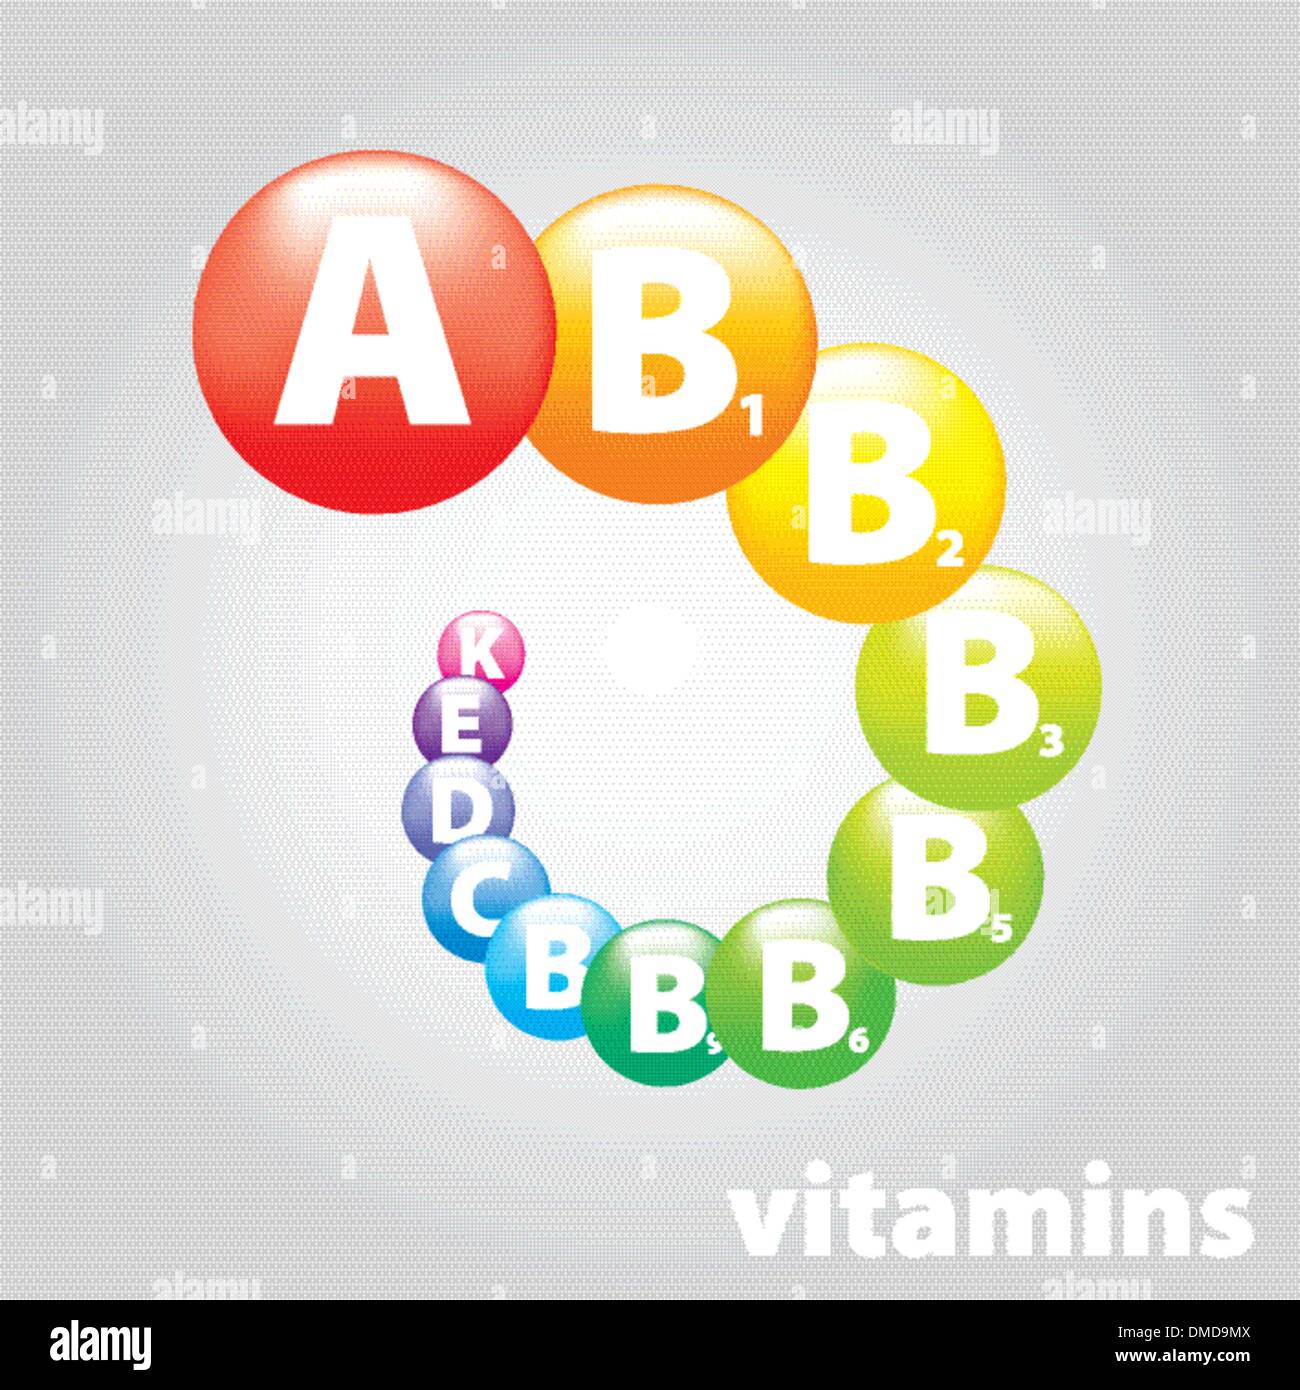 logo brand vitamin nutrition Stock Vector